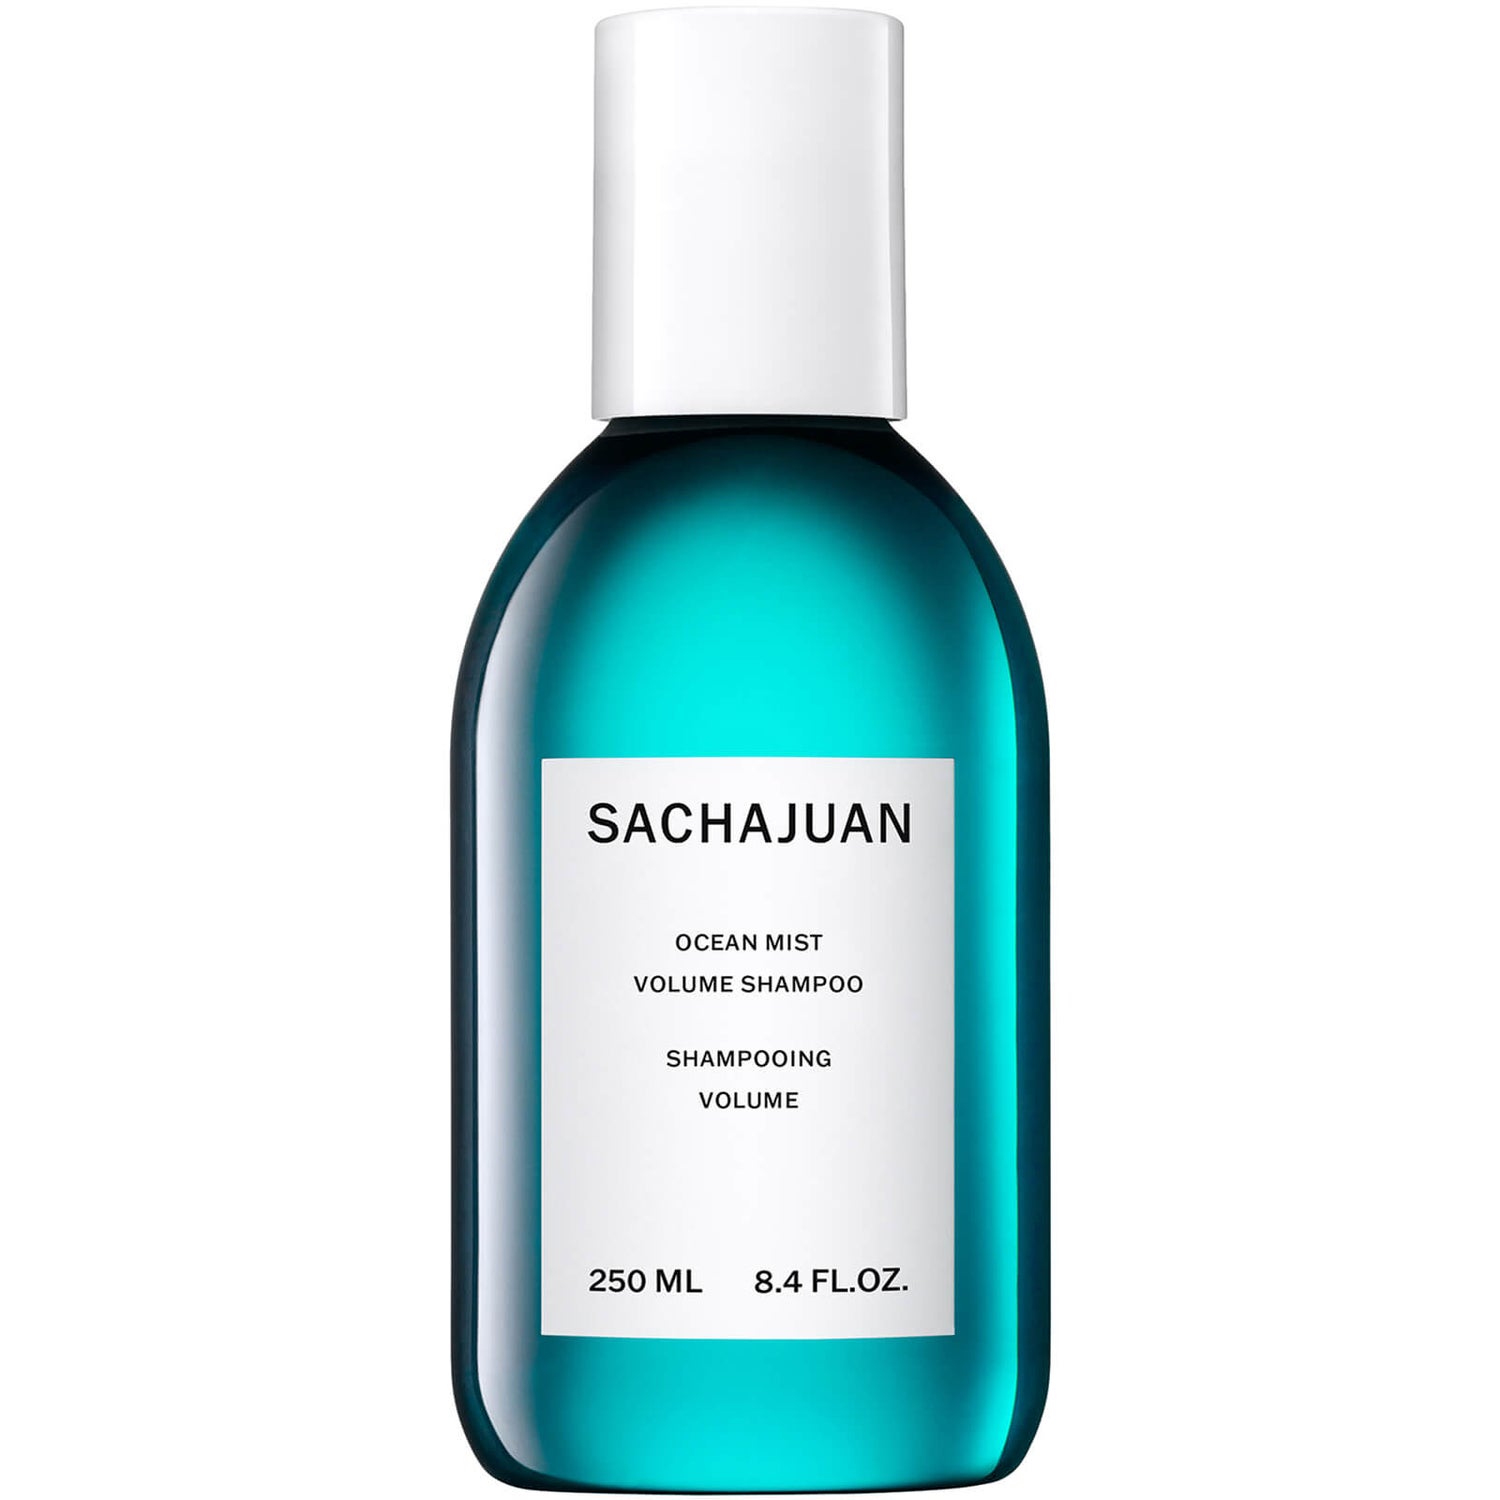 Sachajuan Ocean Mist Volume Shampoo (8.4 fl. oz.)